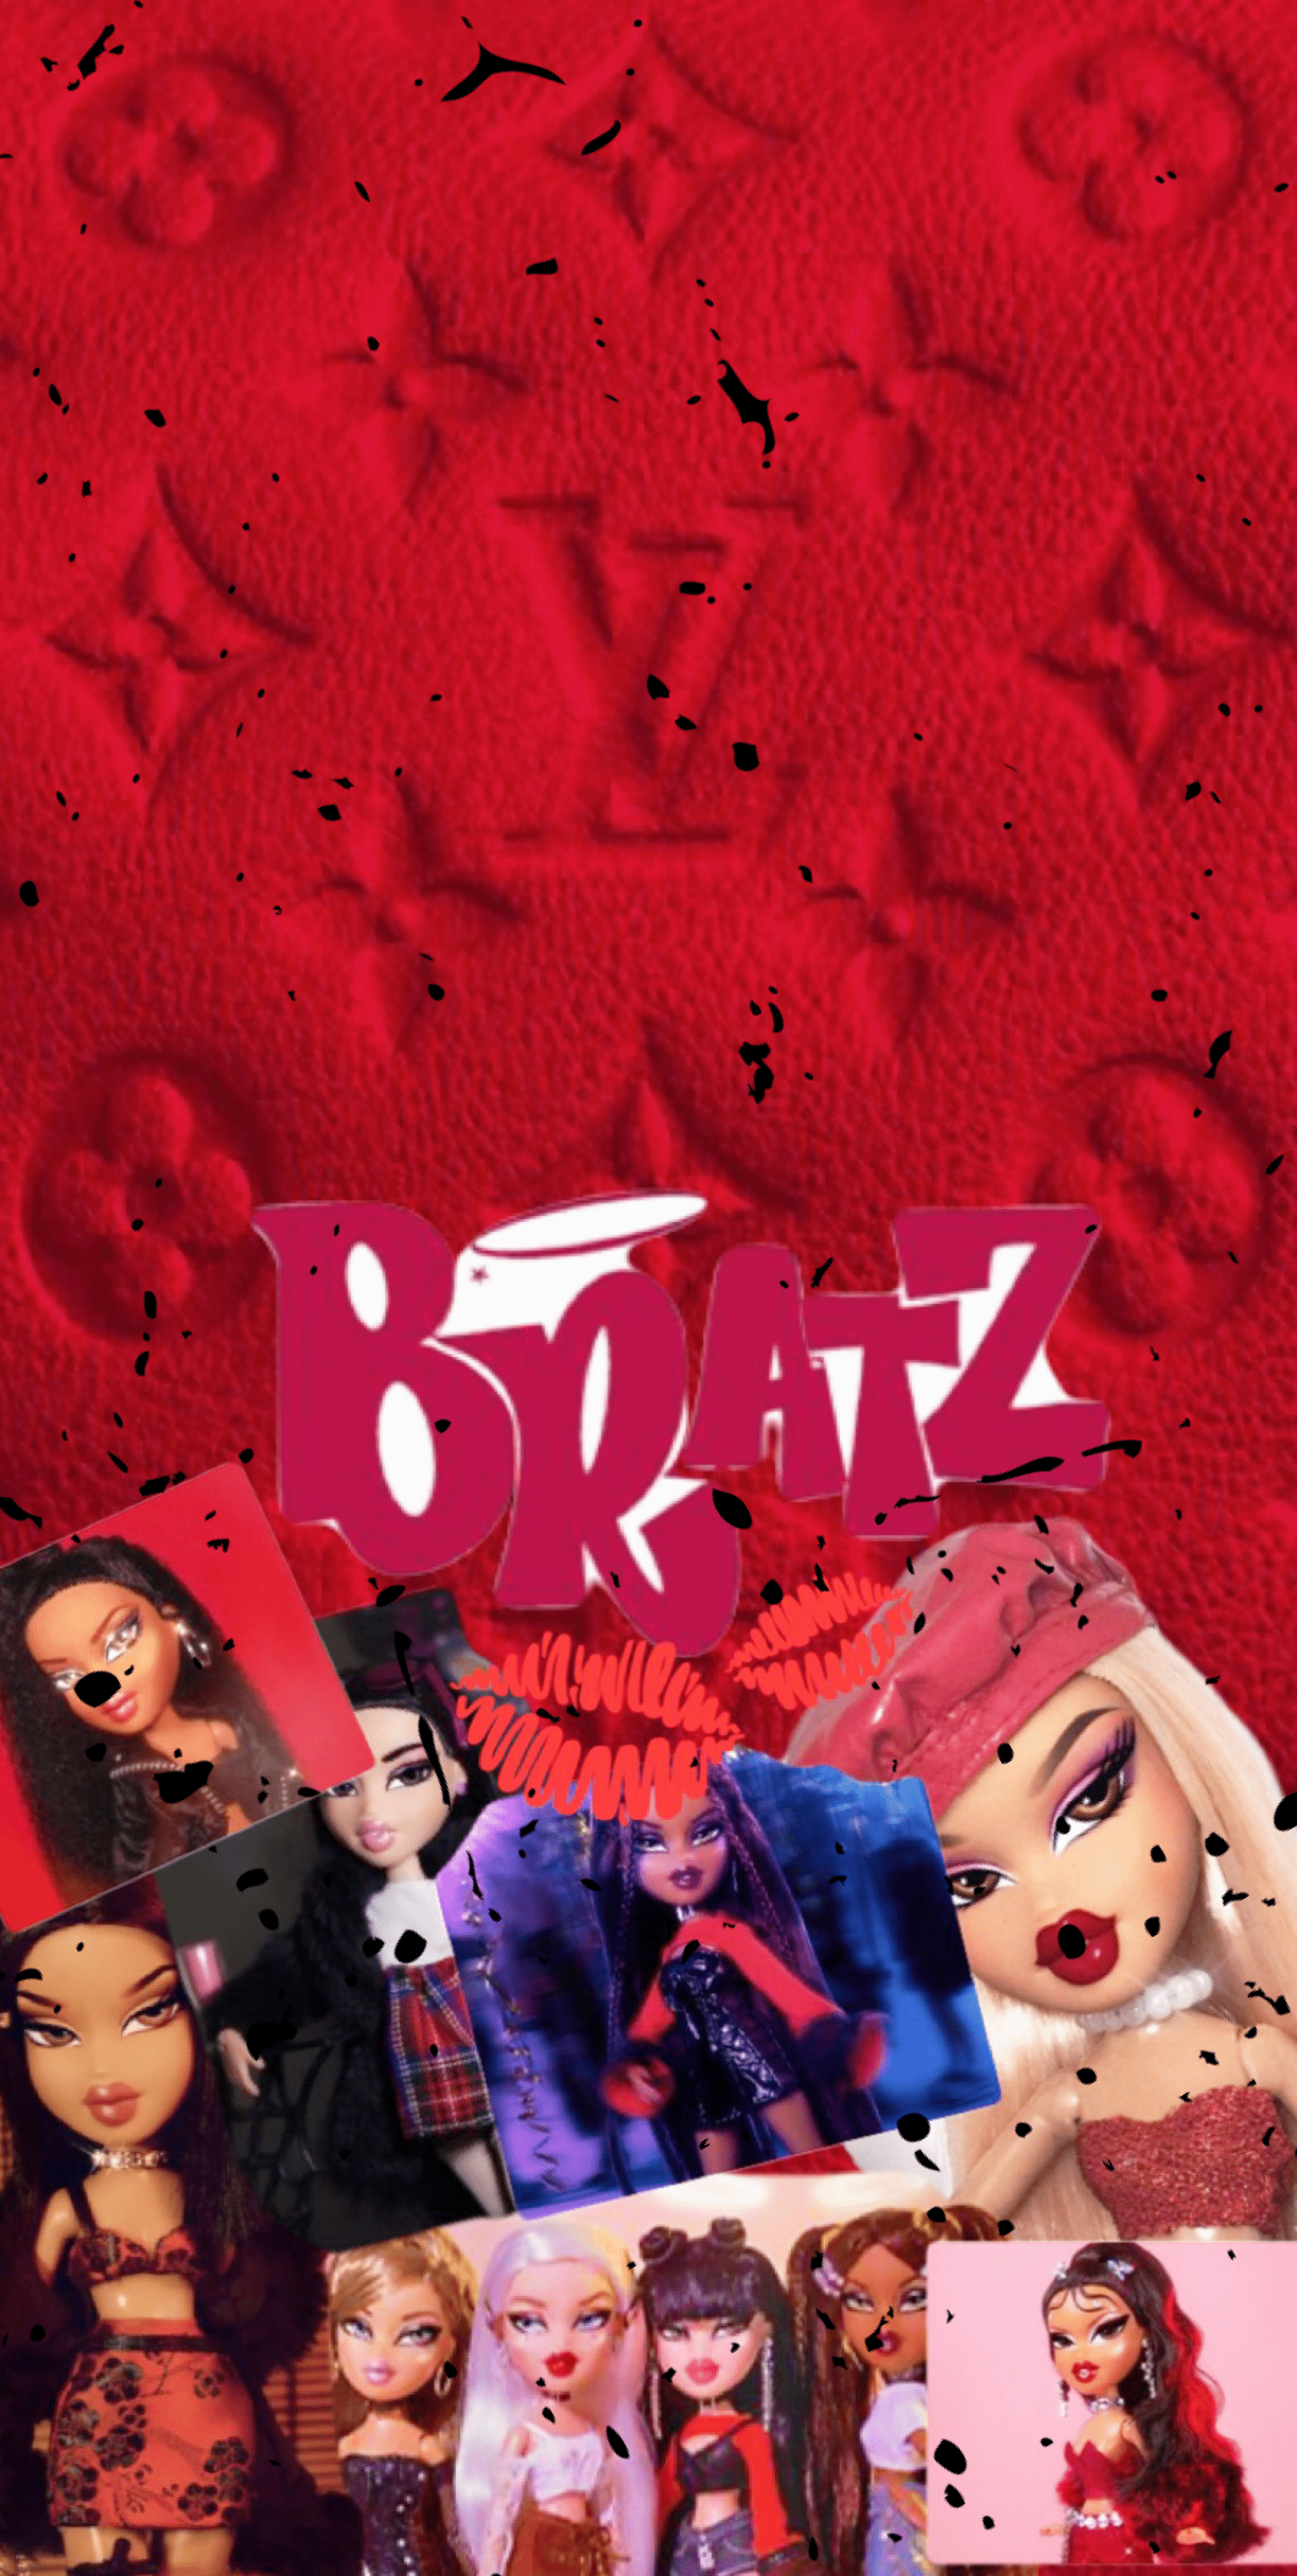 Red Bratz themed wallpaper